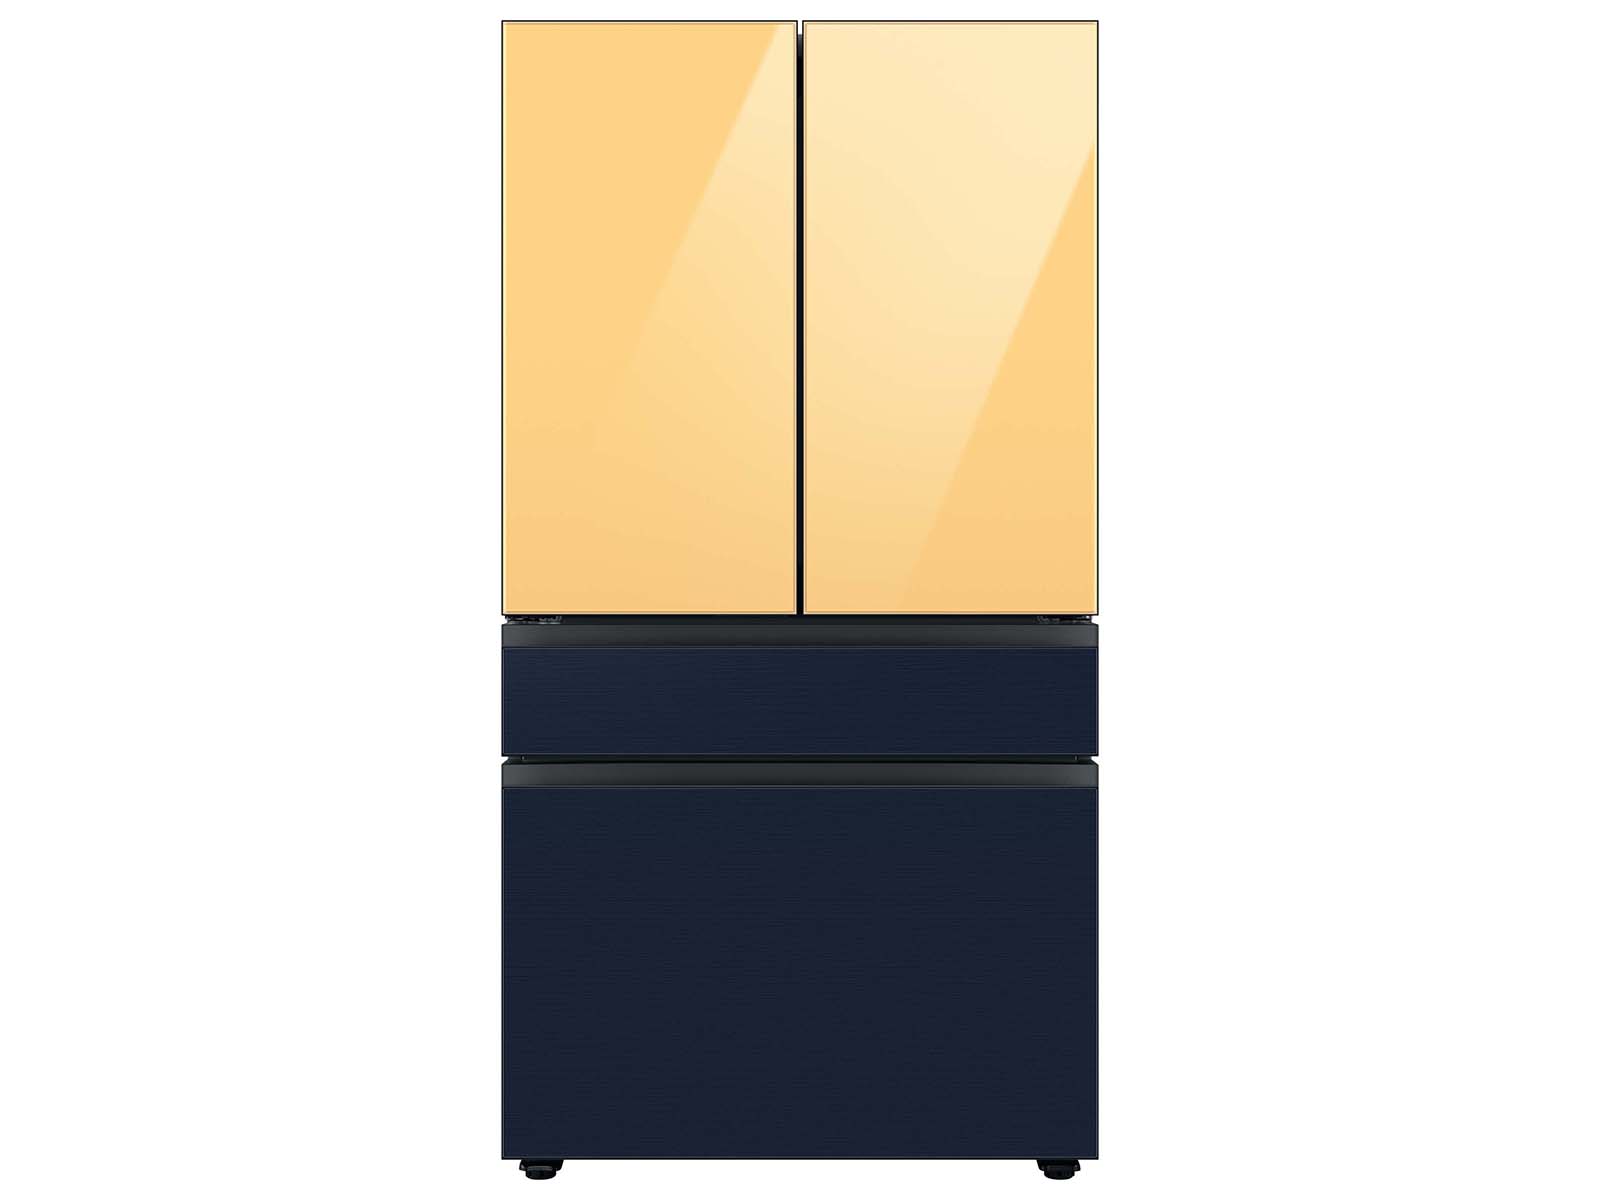 Thumbnail image of Bespoke 4-Door French Door Refrigerator Panel in Sunrise Yellow Glass - Top Panel